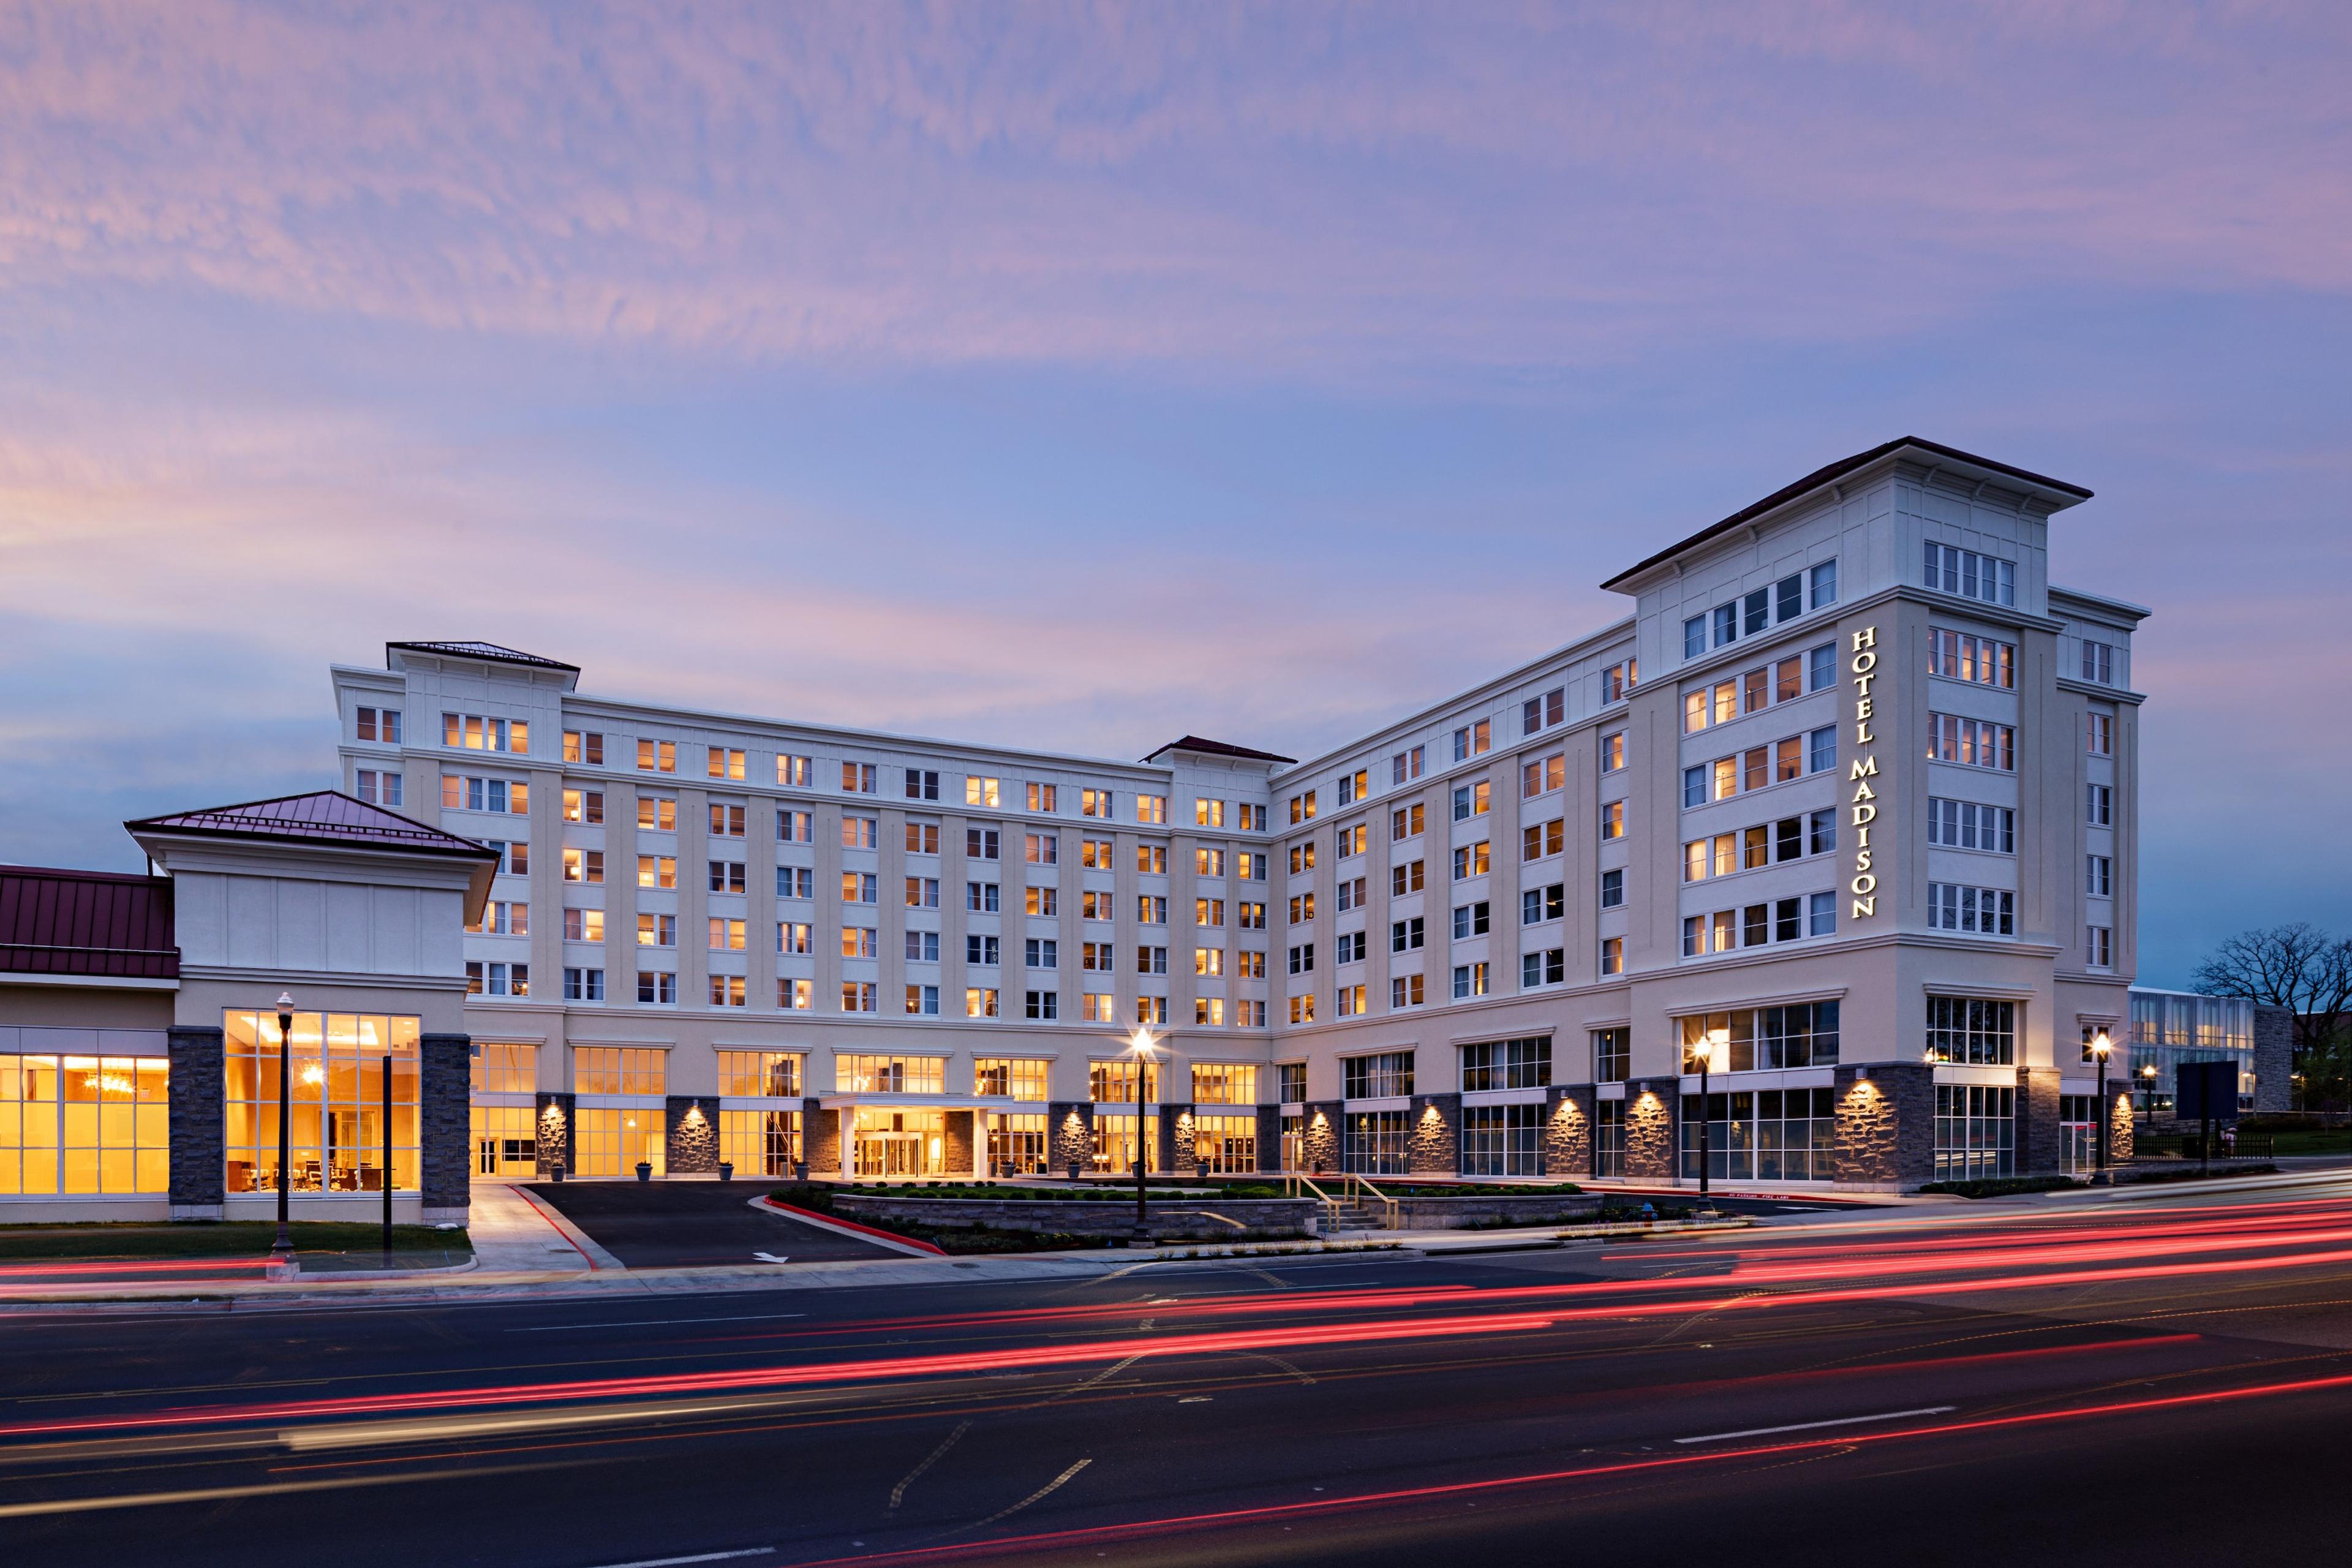 Hotel Madison & Shenandoah Valley Conference Center